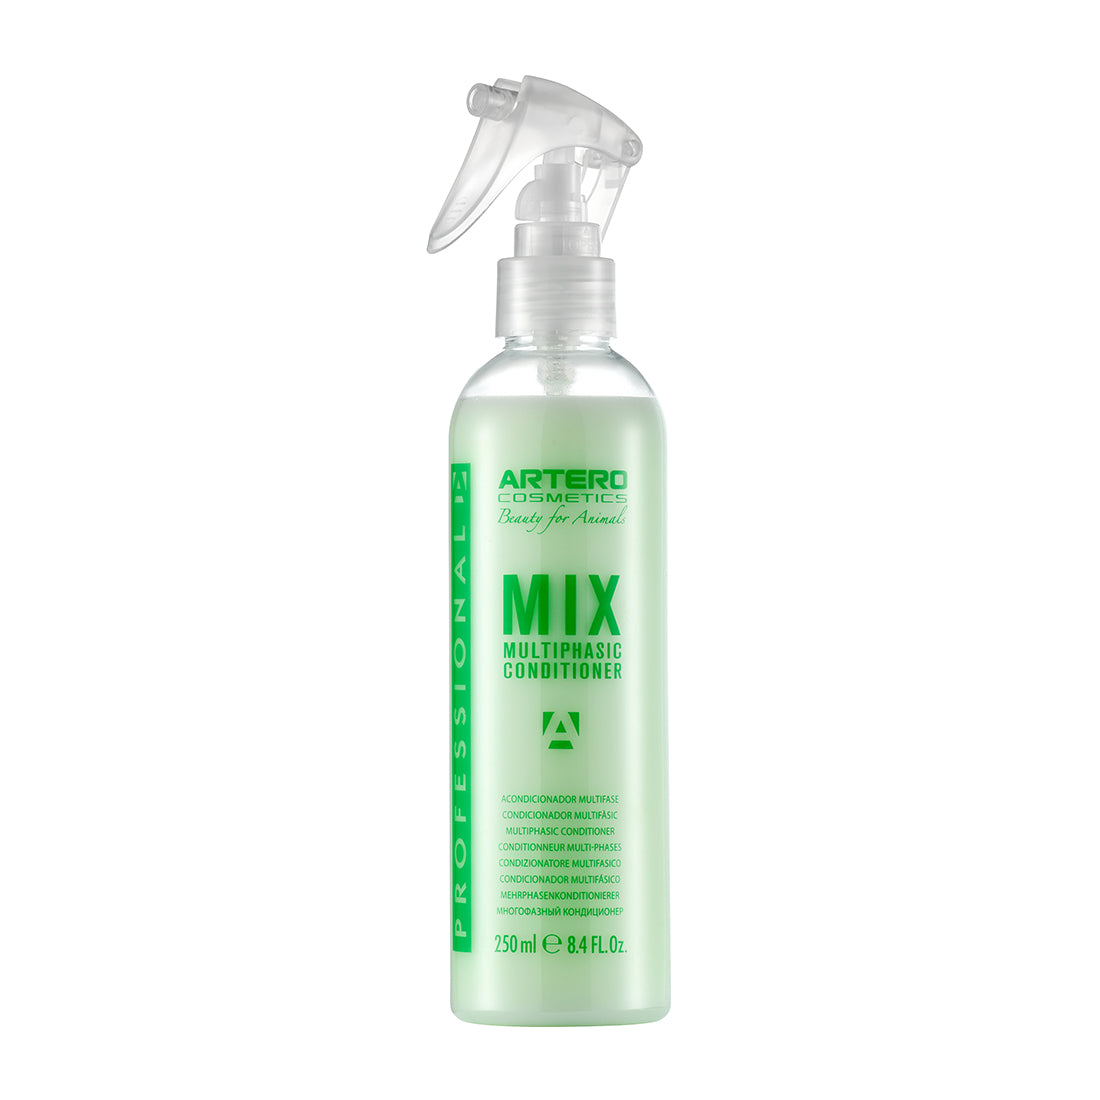 Artero Mix Conditioner Spray 8.4fl oz